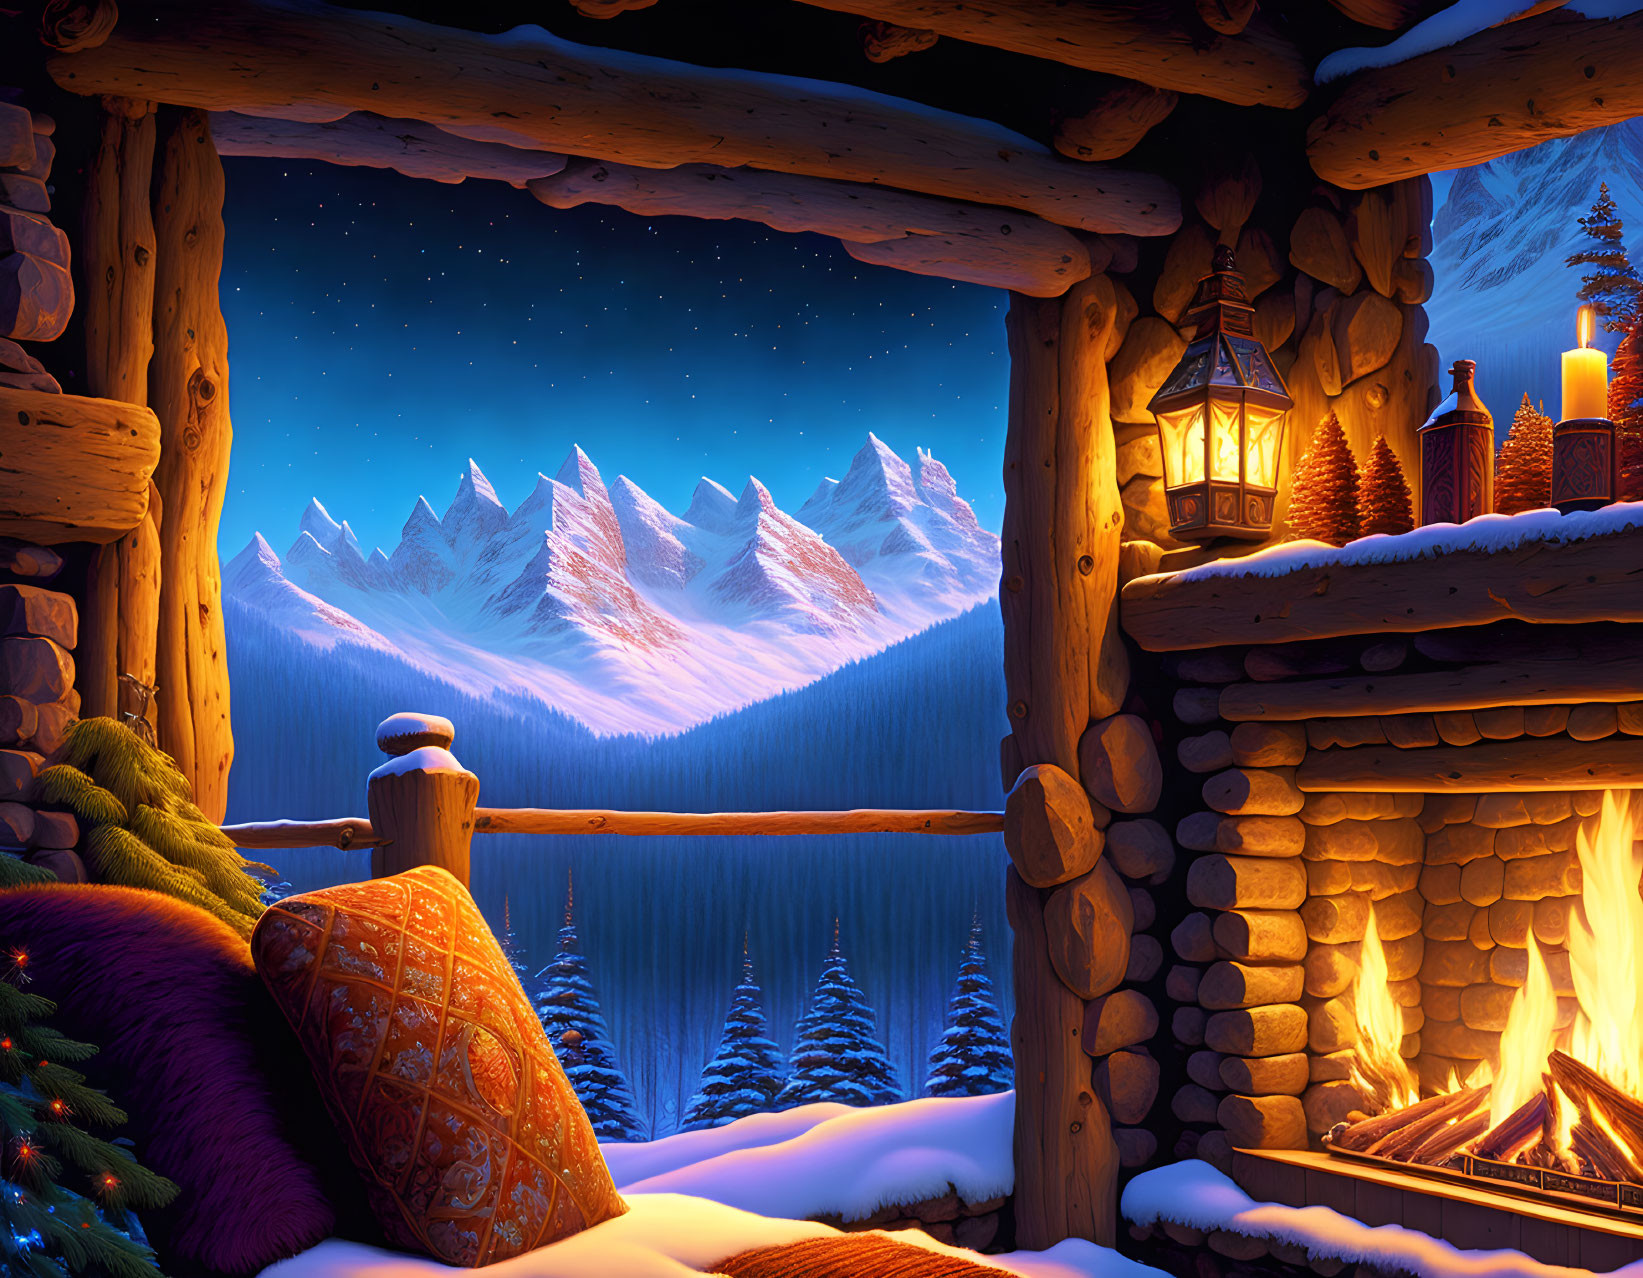 Warm Fireplace & Snowy Mountain View in Cozy Cabin